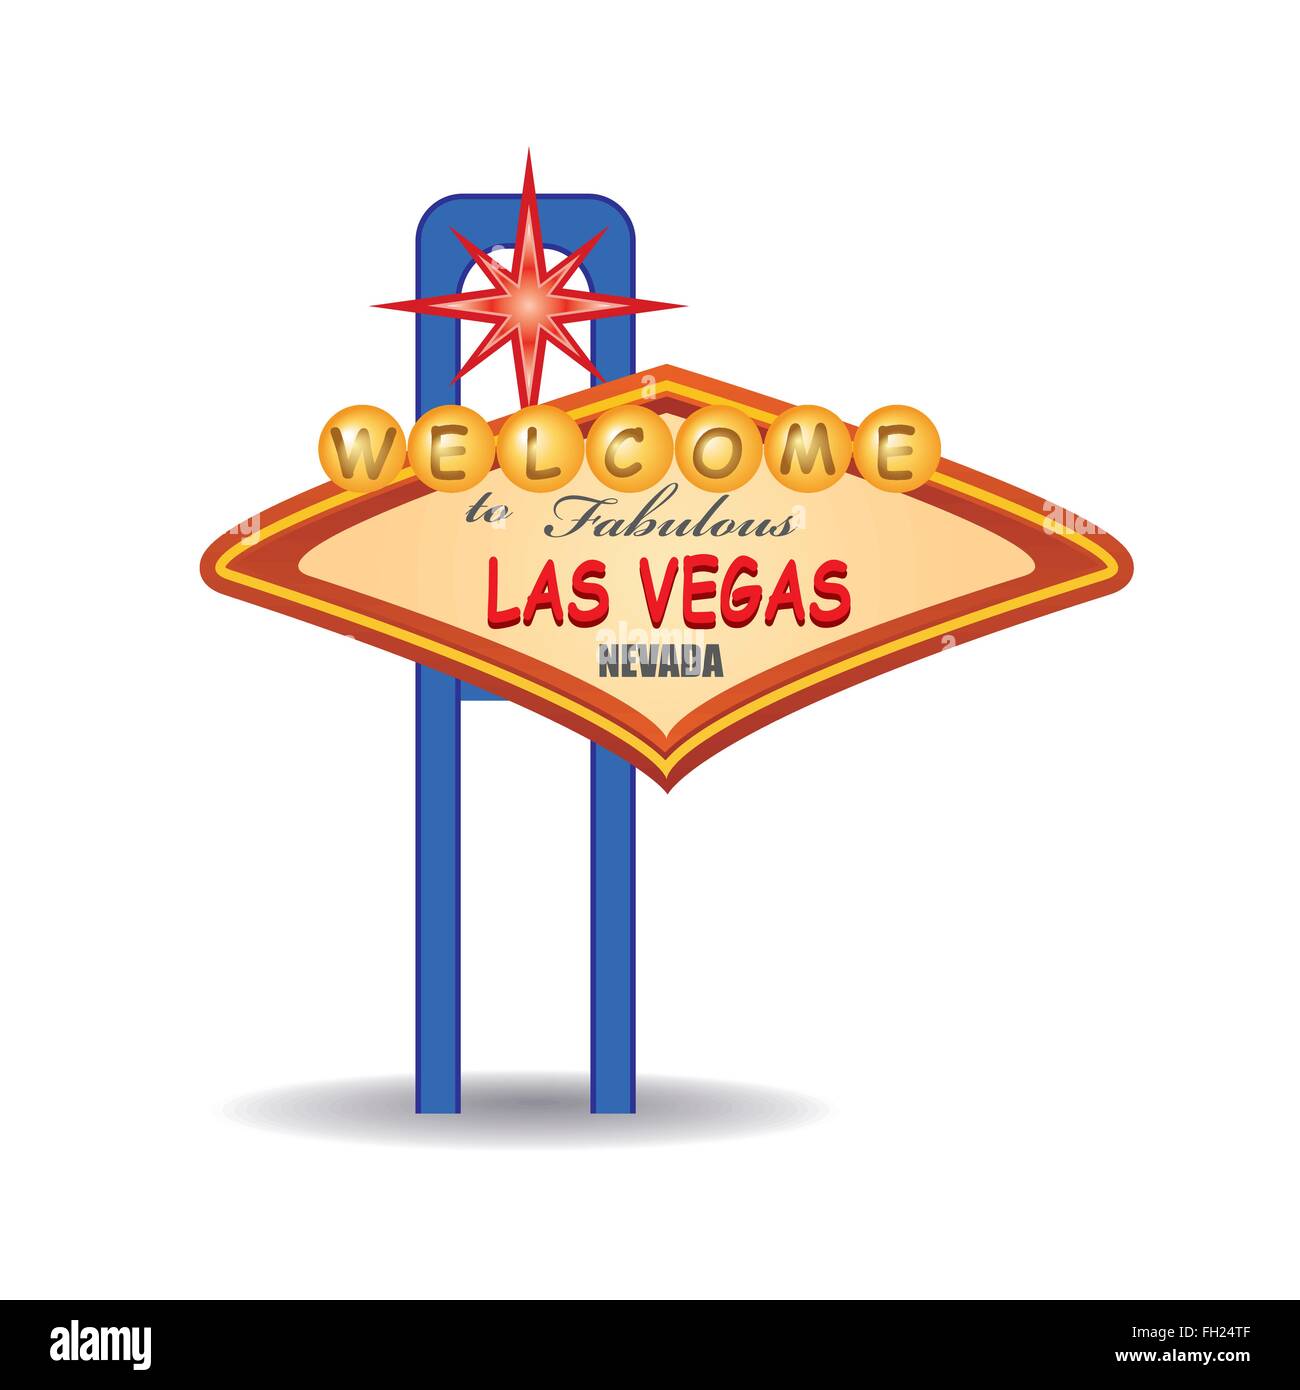 Las Vegas Sign Vector Images – Browse 34,322 Stock Photos, Vectors